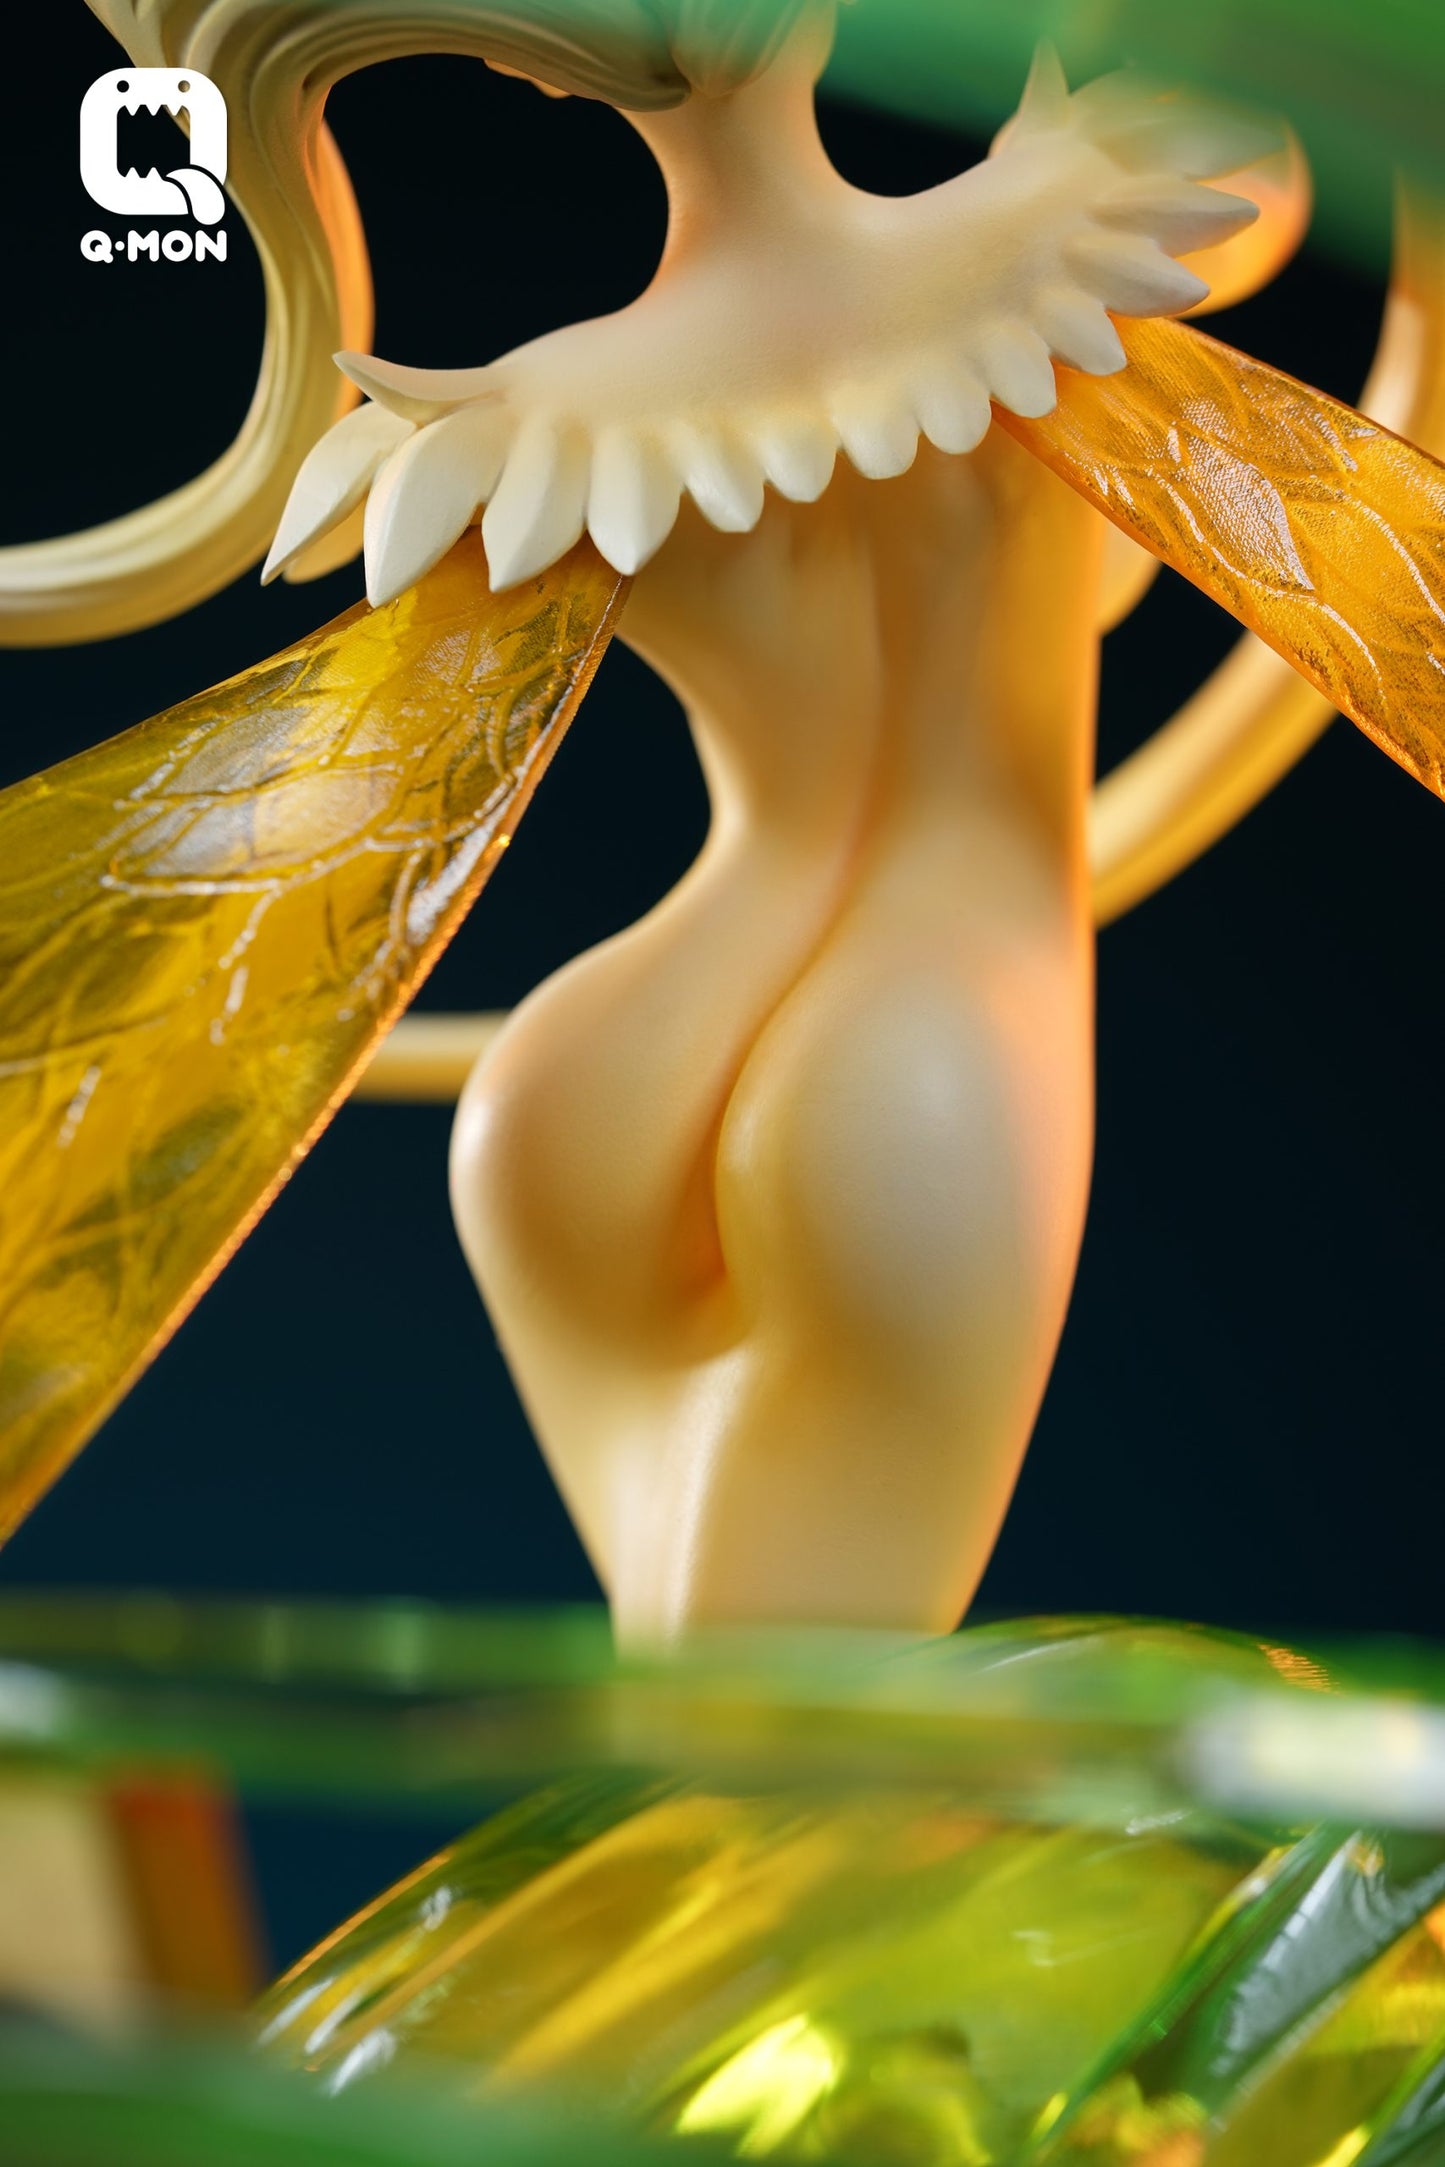 Cardcaptor Sakura Windy Resin Statue - Q-MON Studio [Pre-Order]